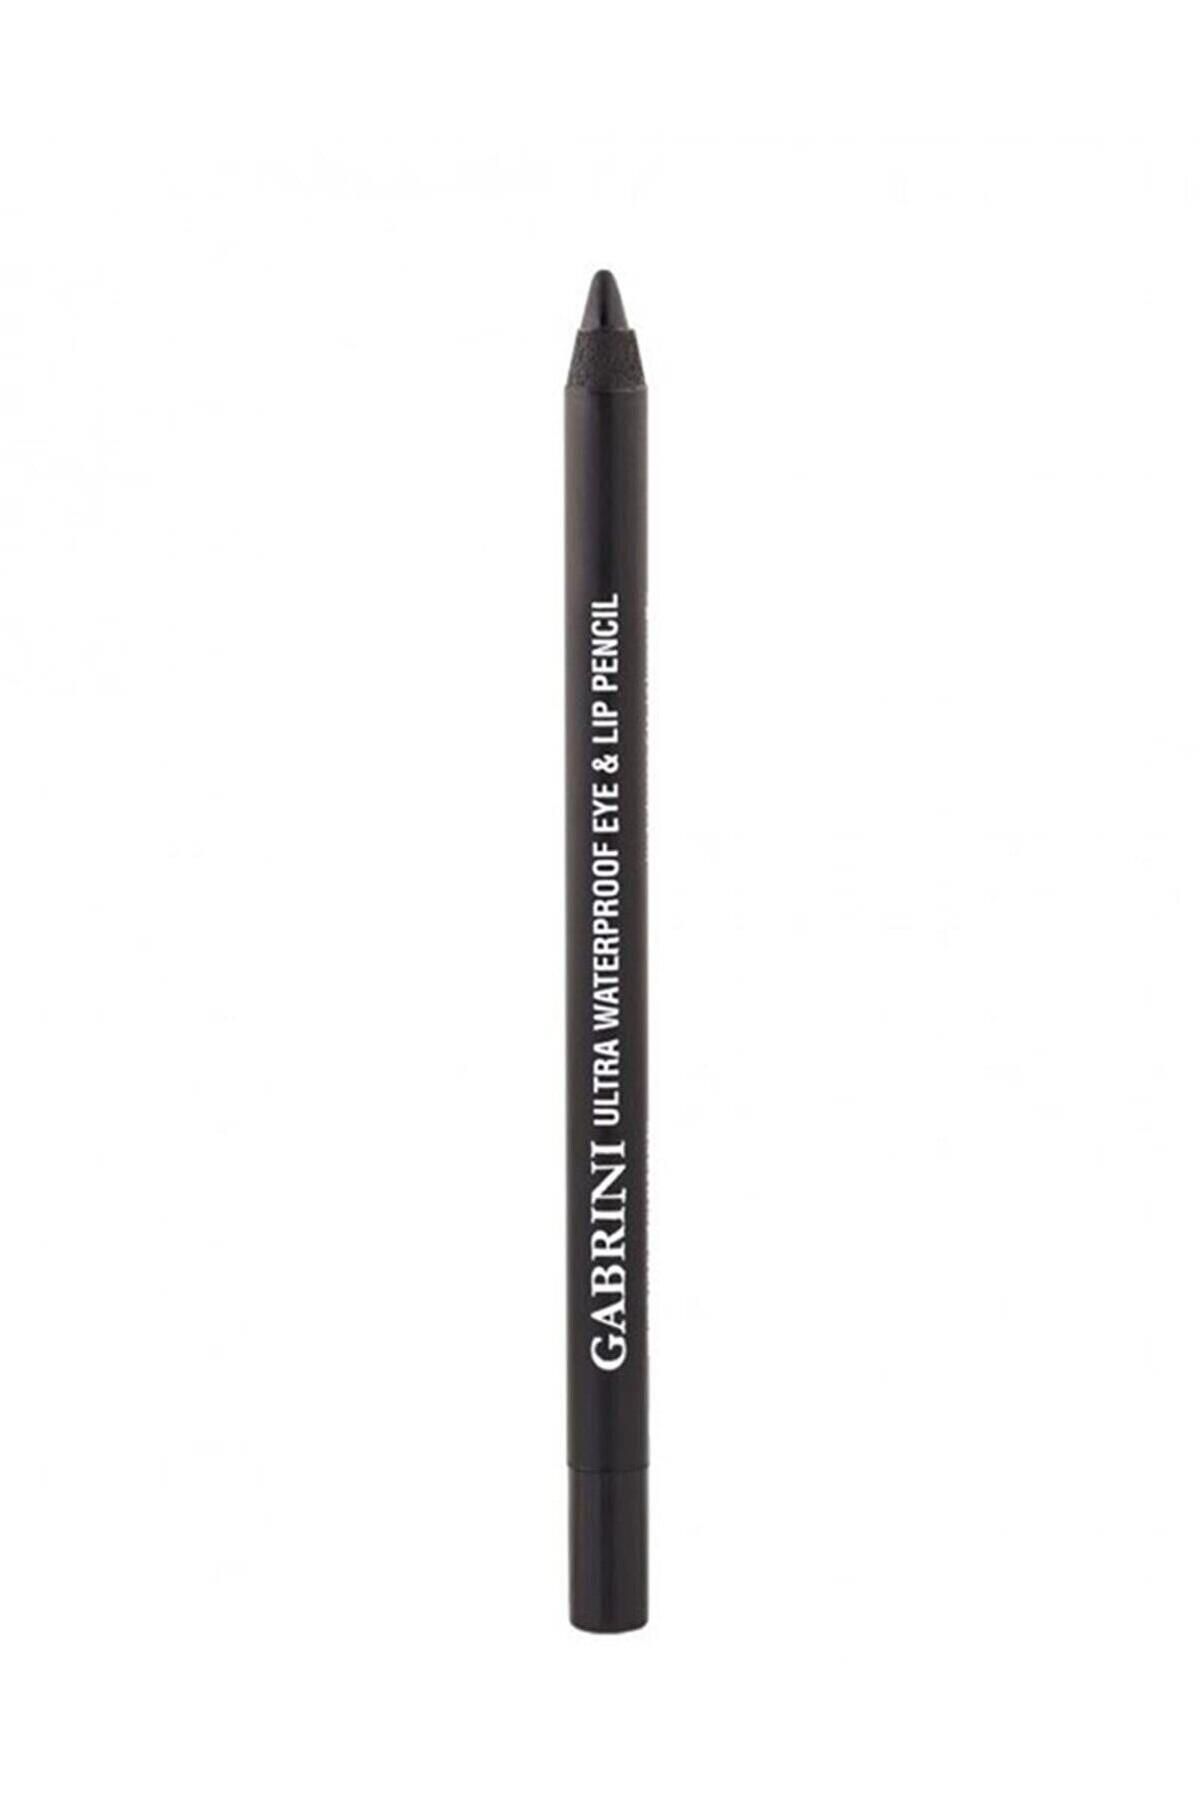 Gabrini Ultra Waterproof Eye & Lip Pencil 01